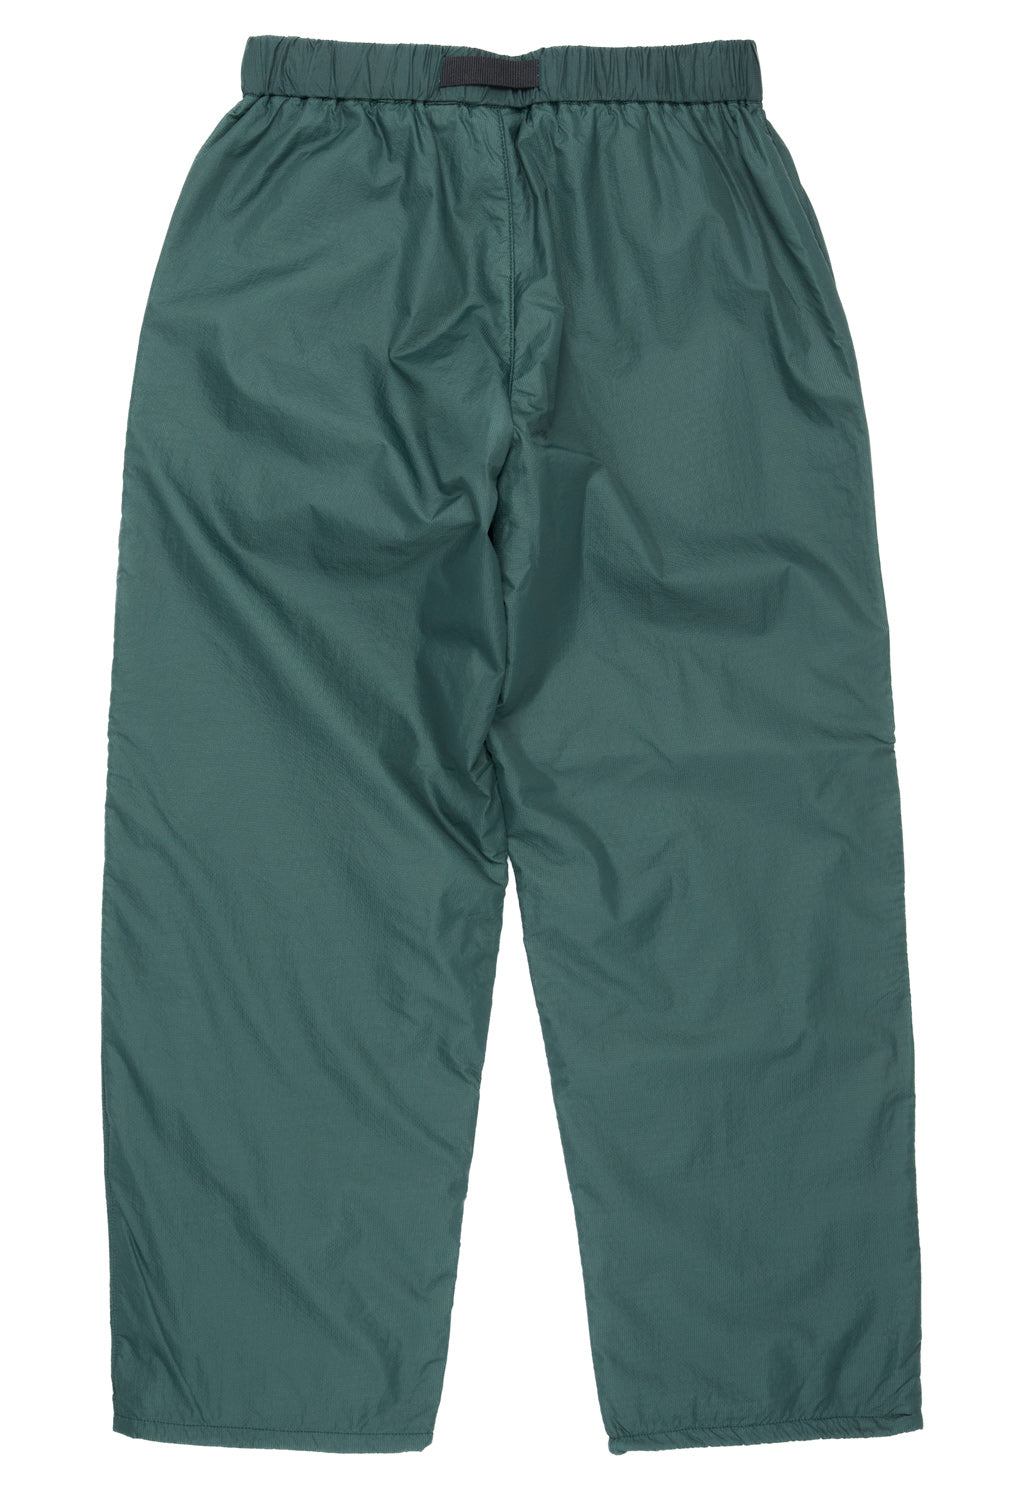 Wild Things Men's Polar Alpha Pants - Green